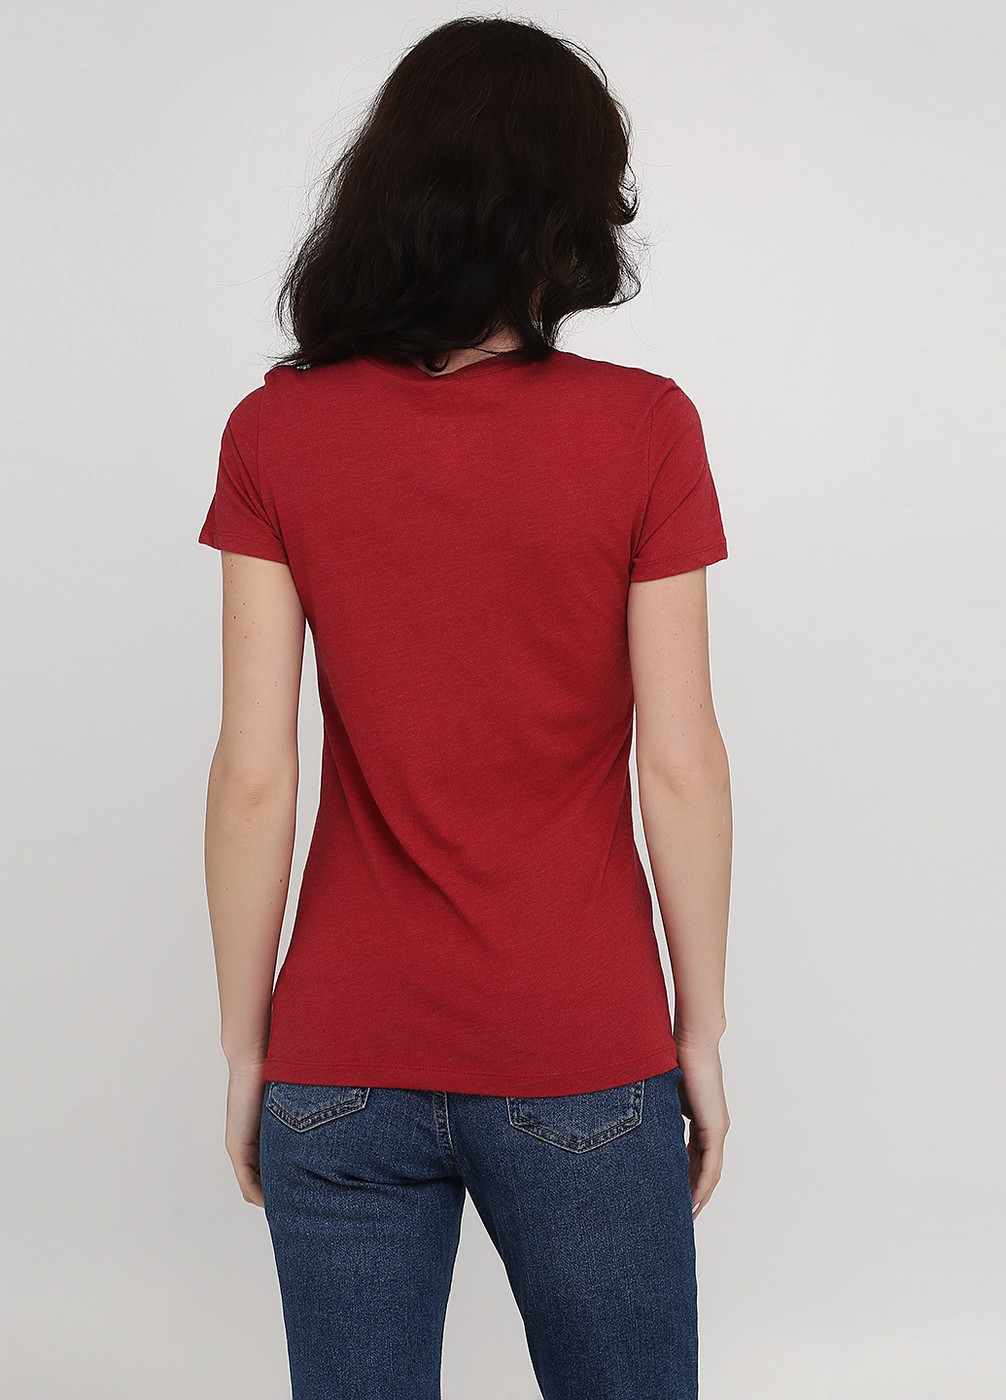 Красная футболка - женская футболка Aeropostale